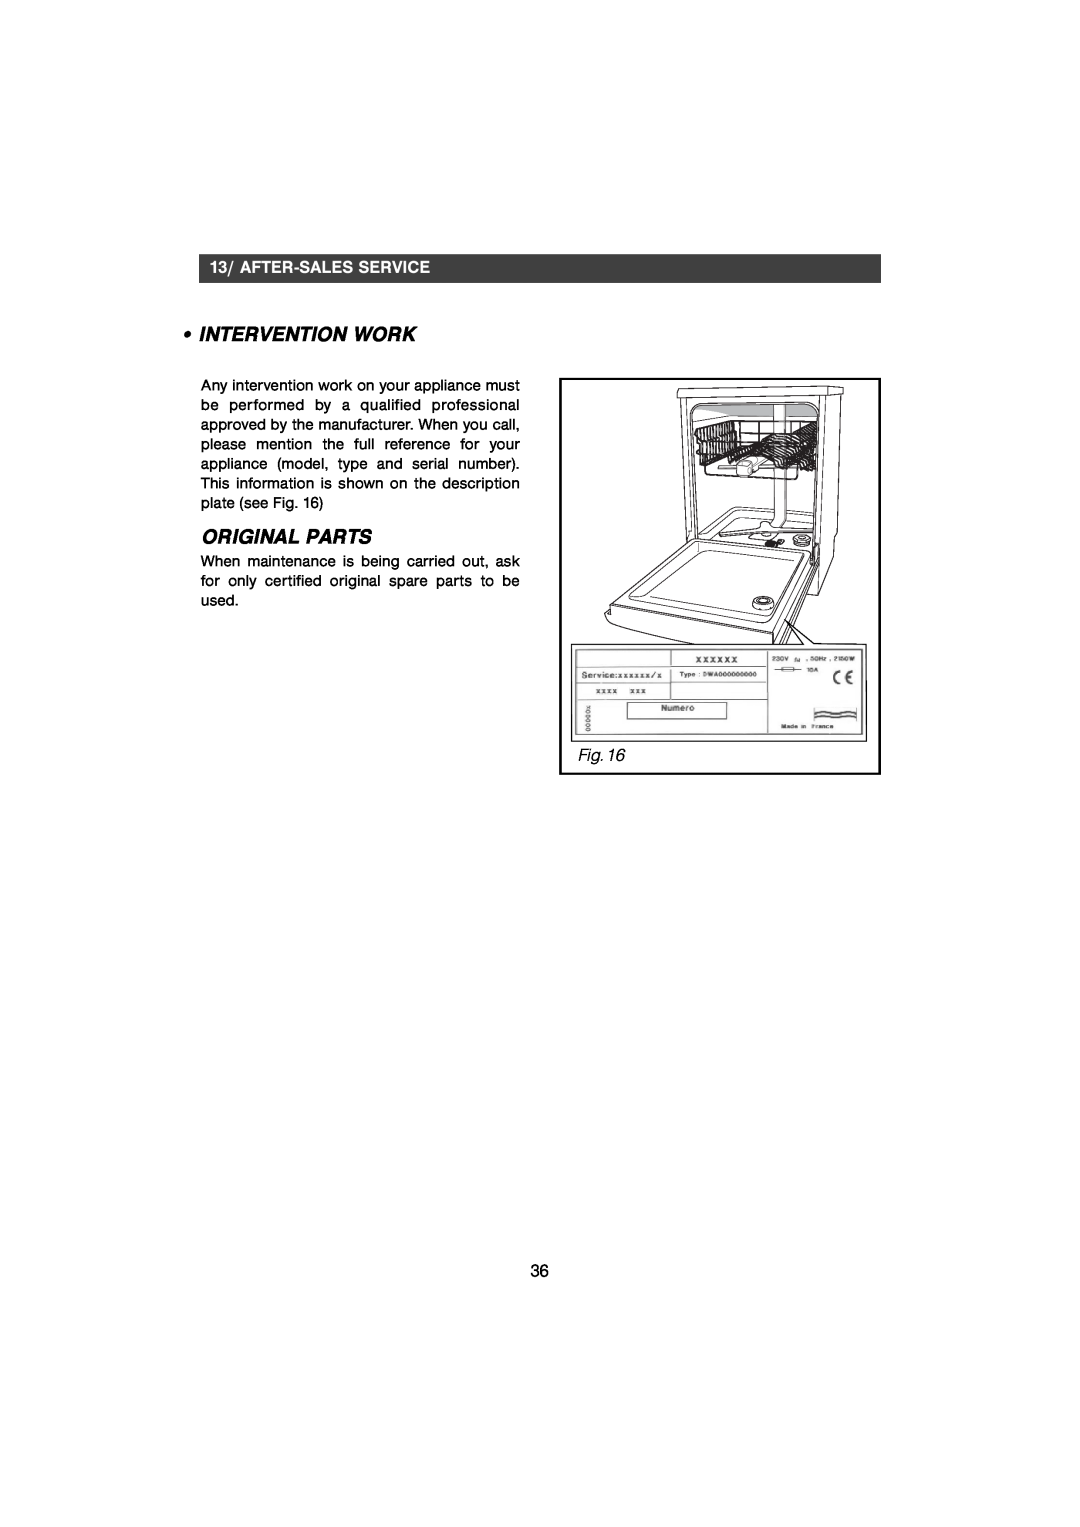 CDA WF250SS manual Intervention Work, Original Parts, 13/ AFTER-SALES SERVICE 